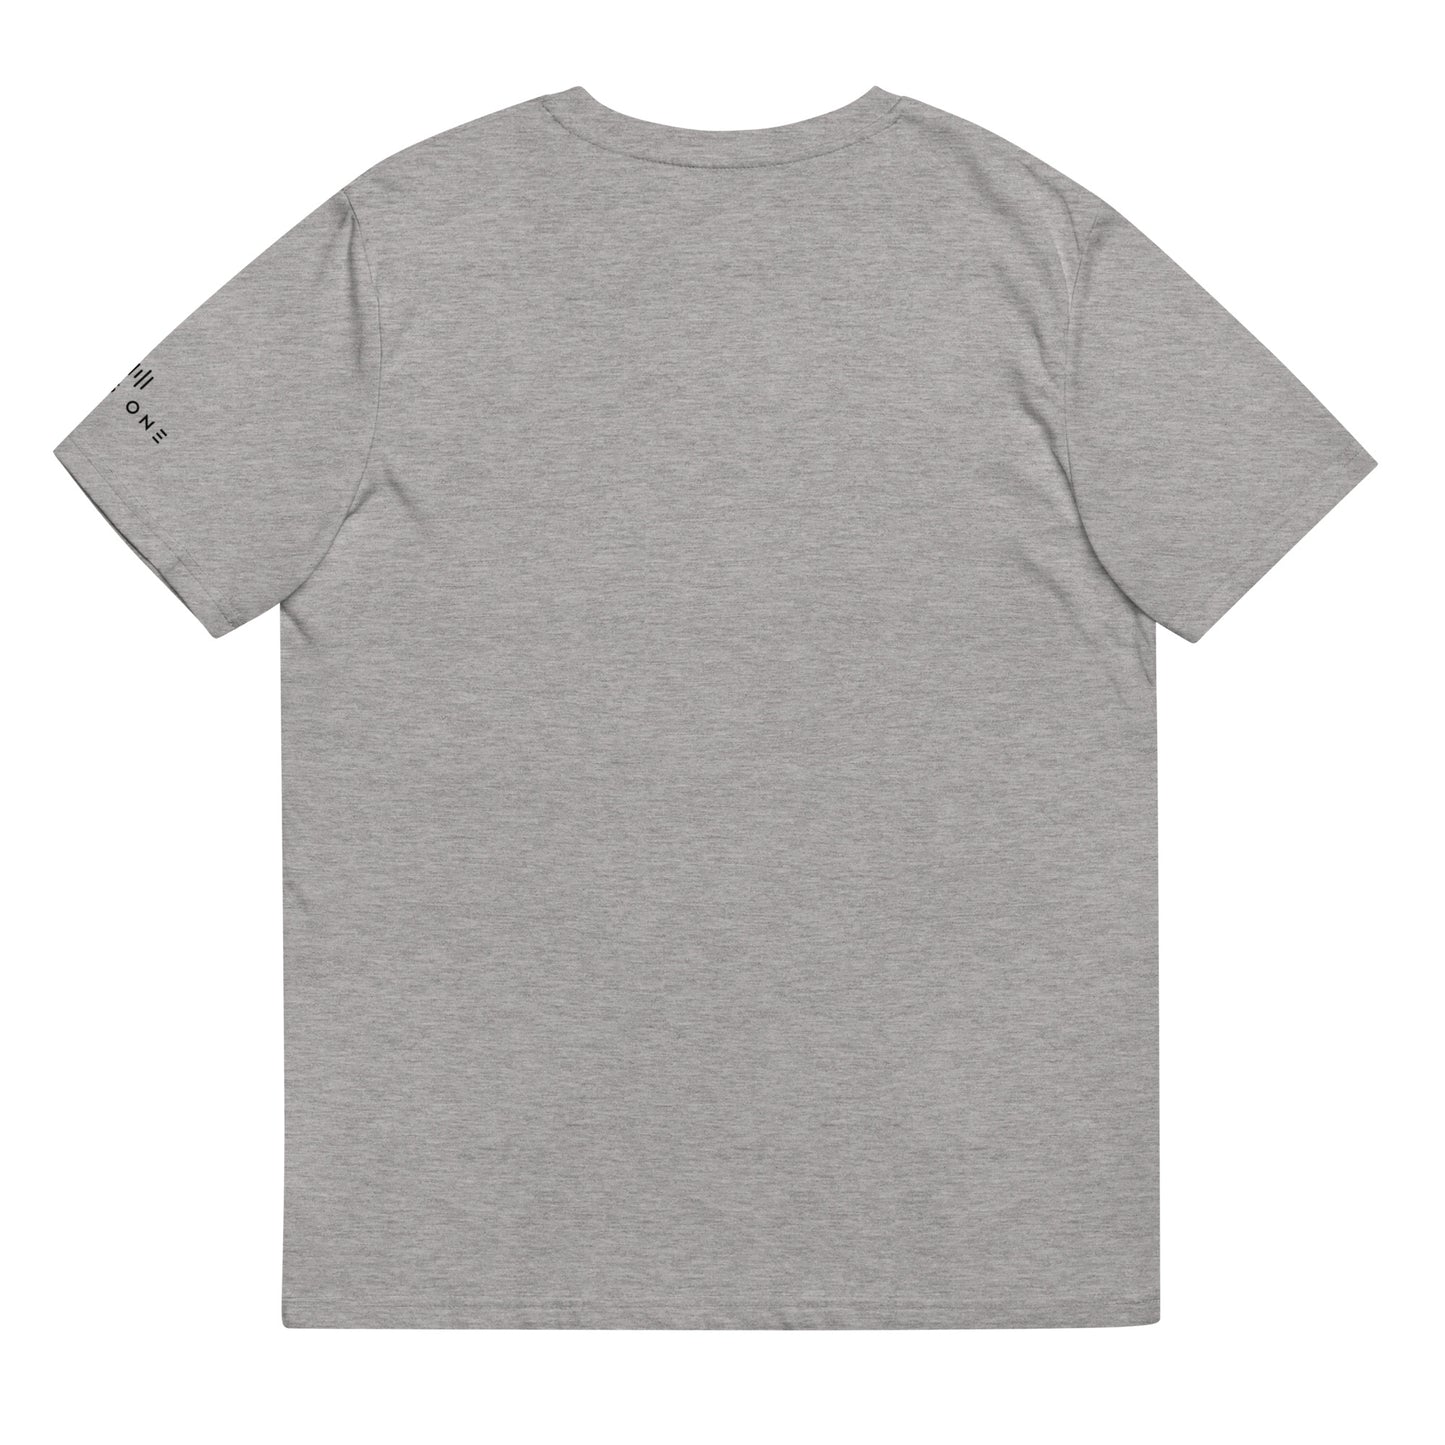 Ltd (Kitty Ninja v2) Unisex organic cotton t-shirt (Black Text)